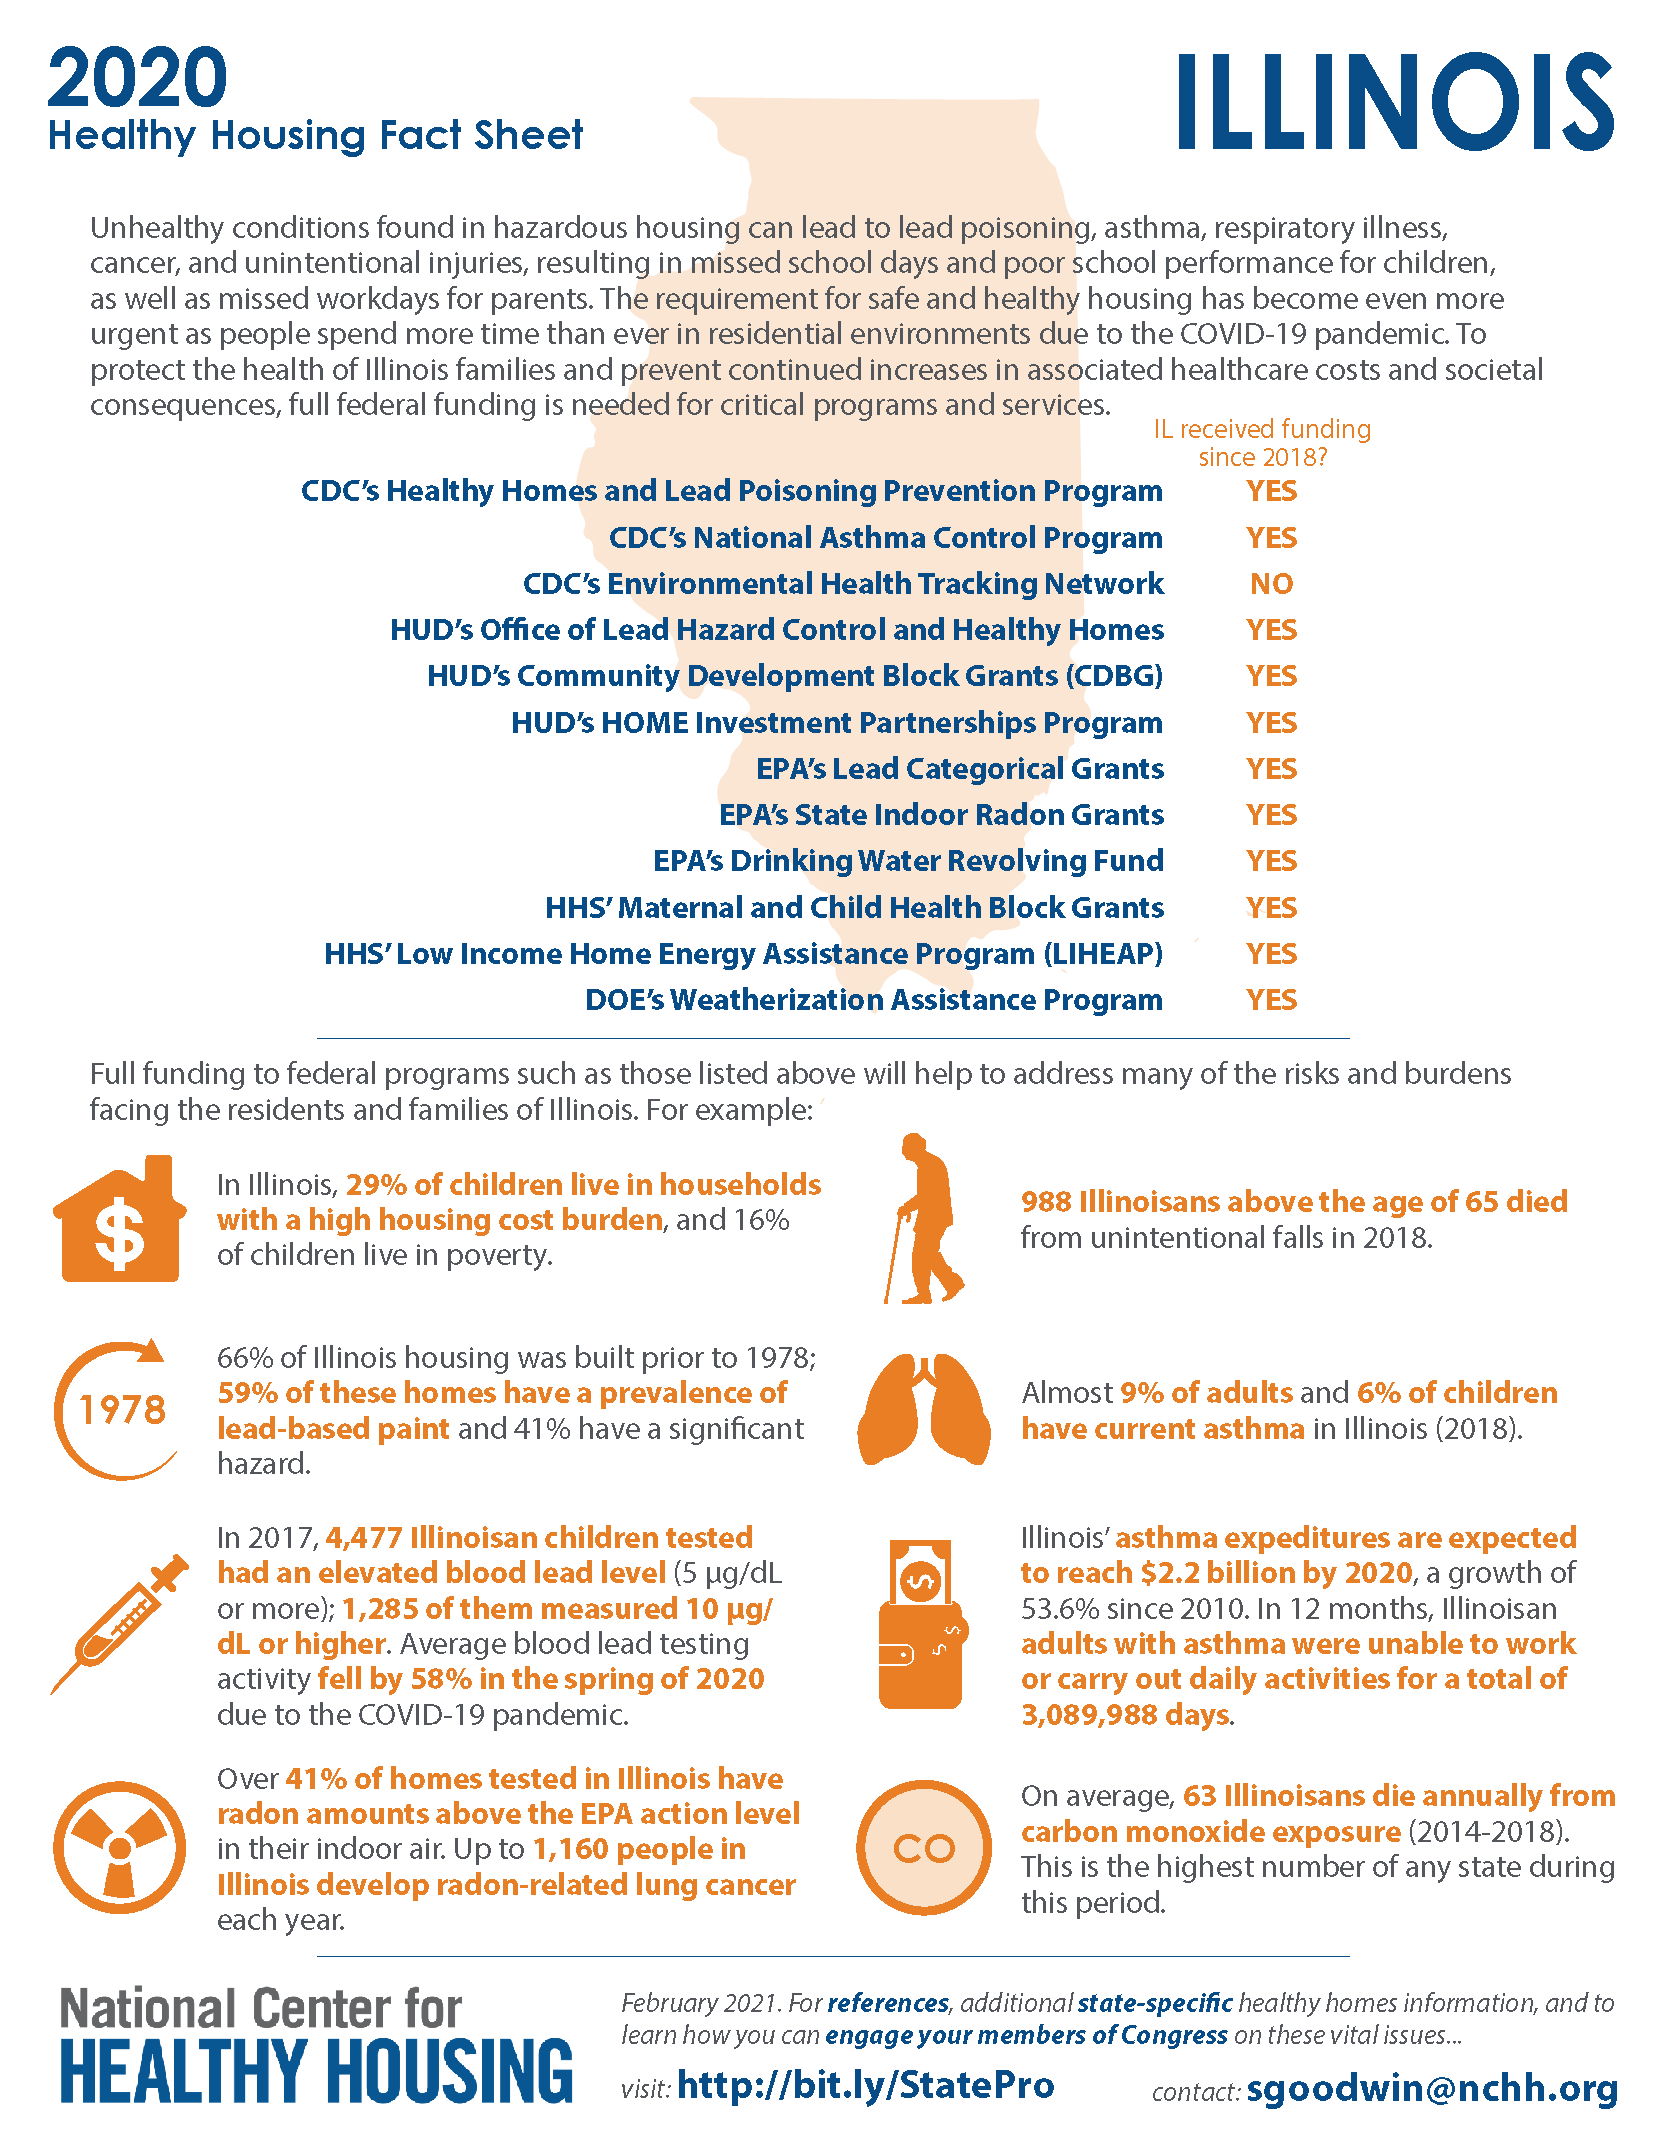 Healthy Housing Fact Sheet - Illinois 2020